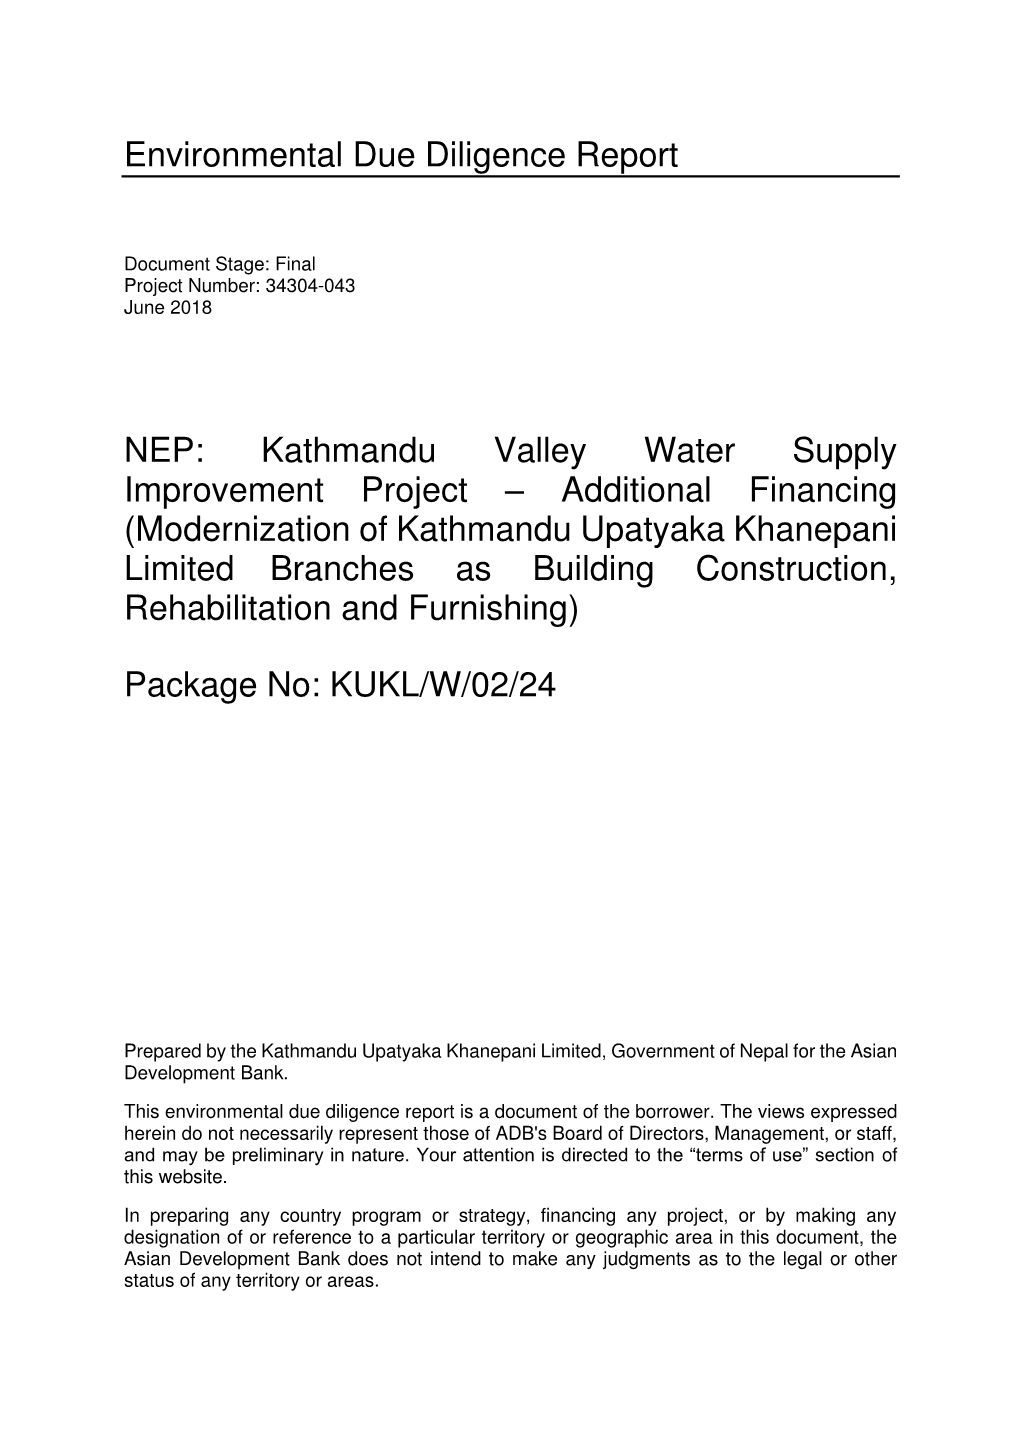 34304-043: Kathmandu Valley Water Supply